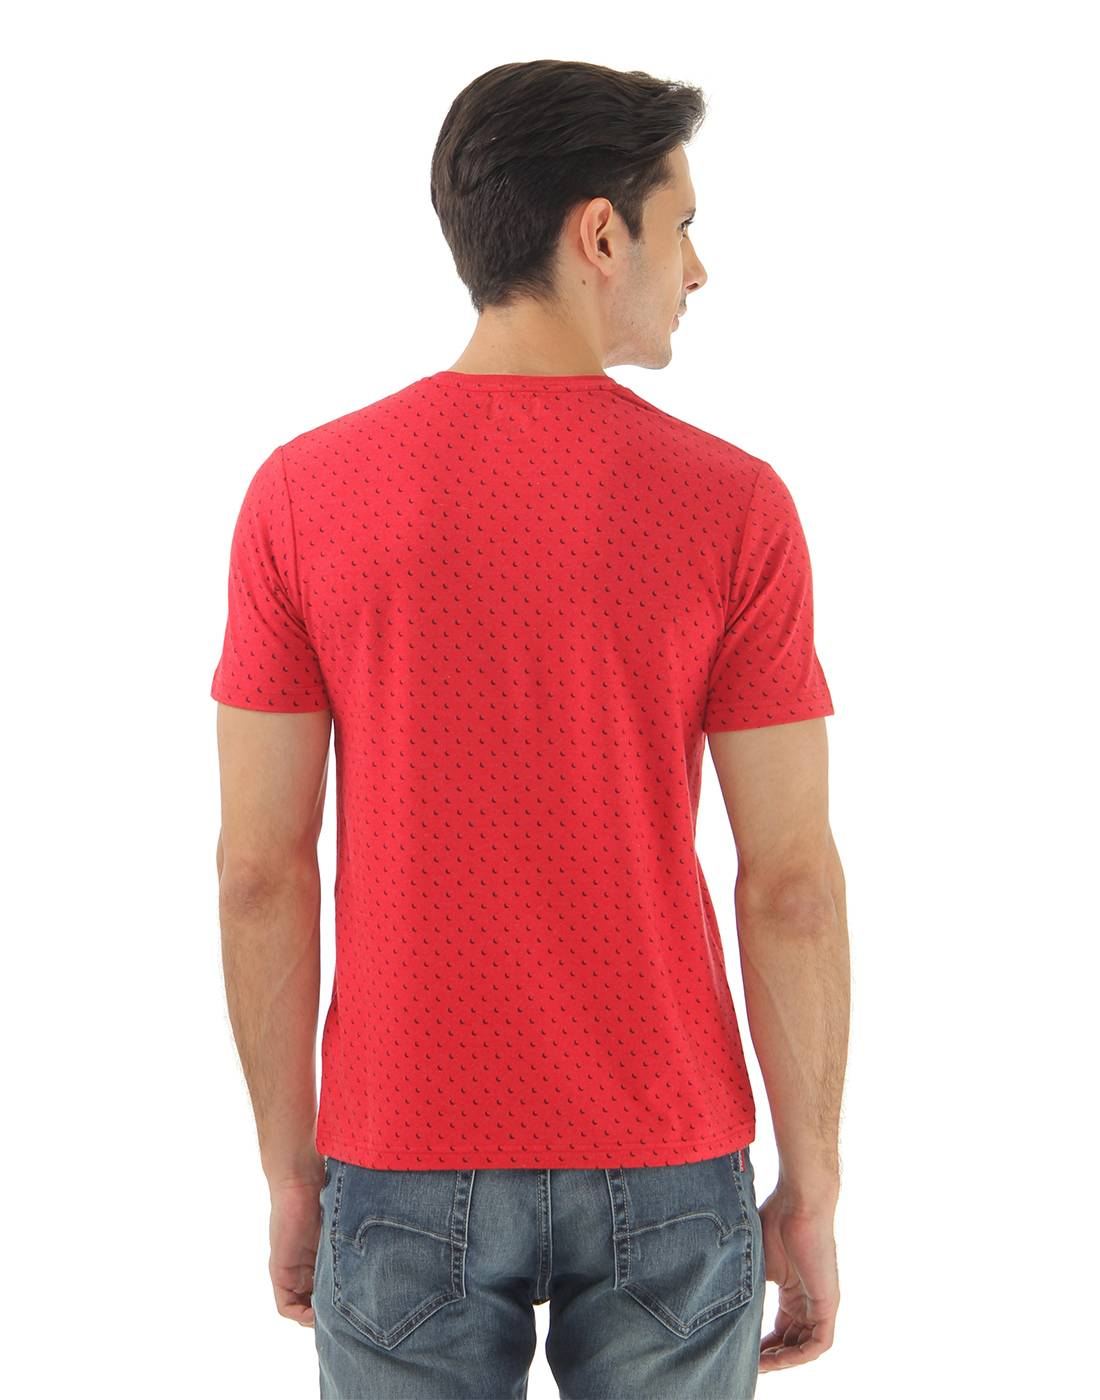 Cloak & Decker by Monte Carlo Men Red T-Shirt